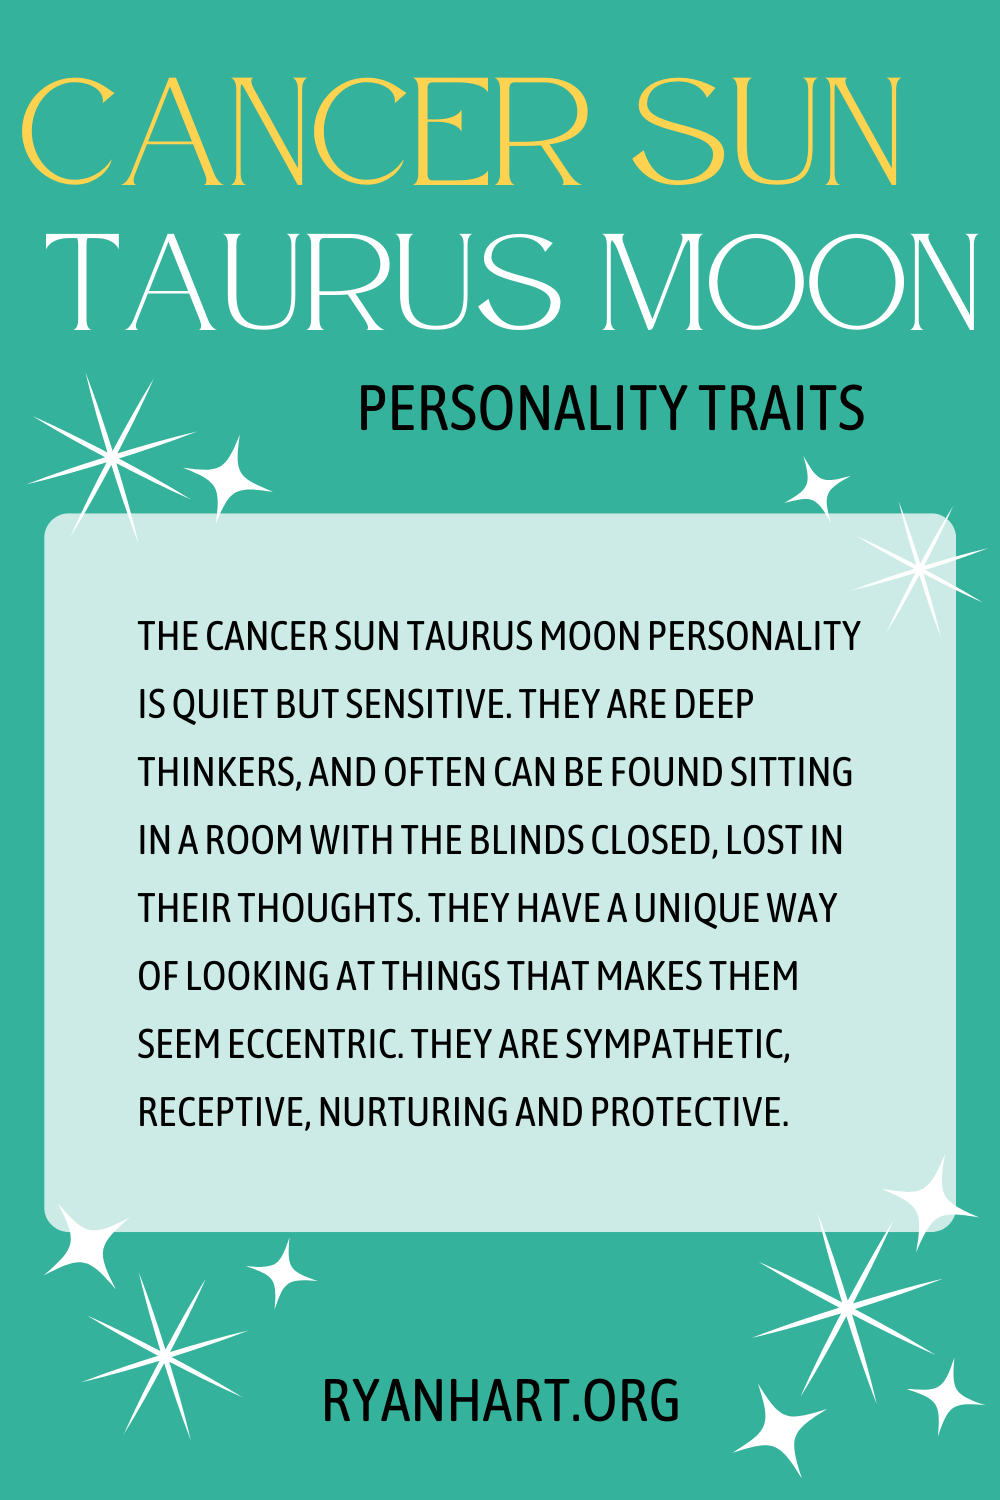 Cancer Sun Taurus Moon Description